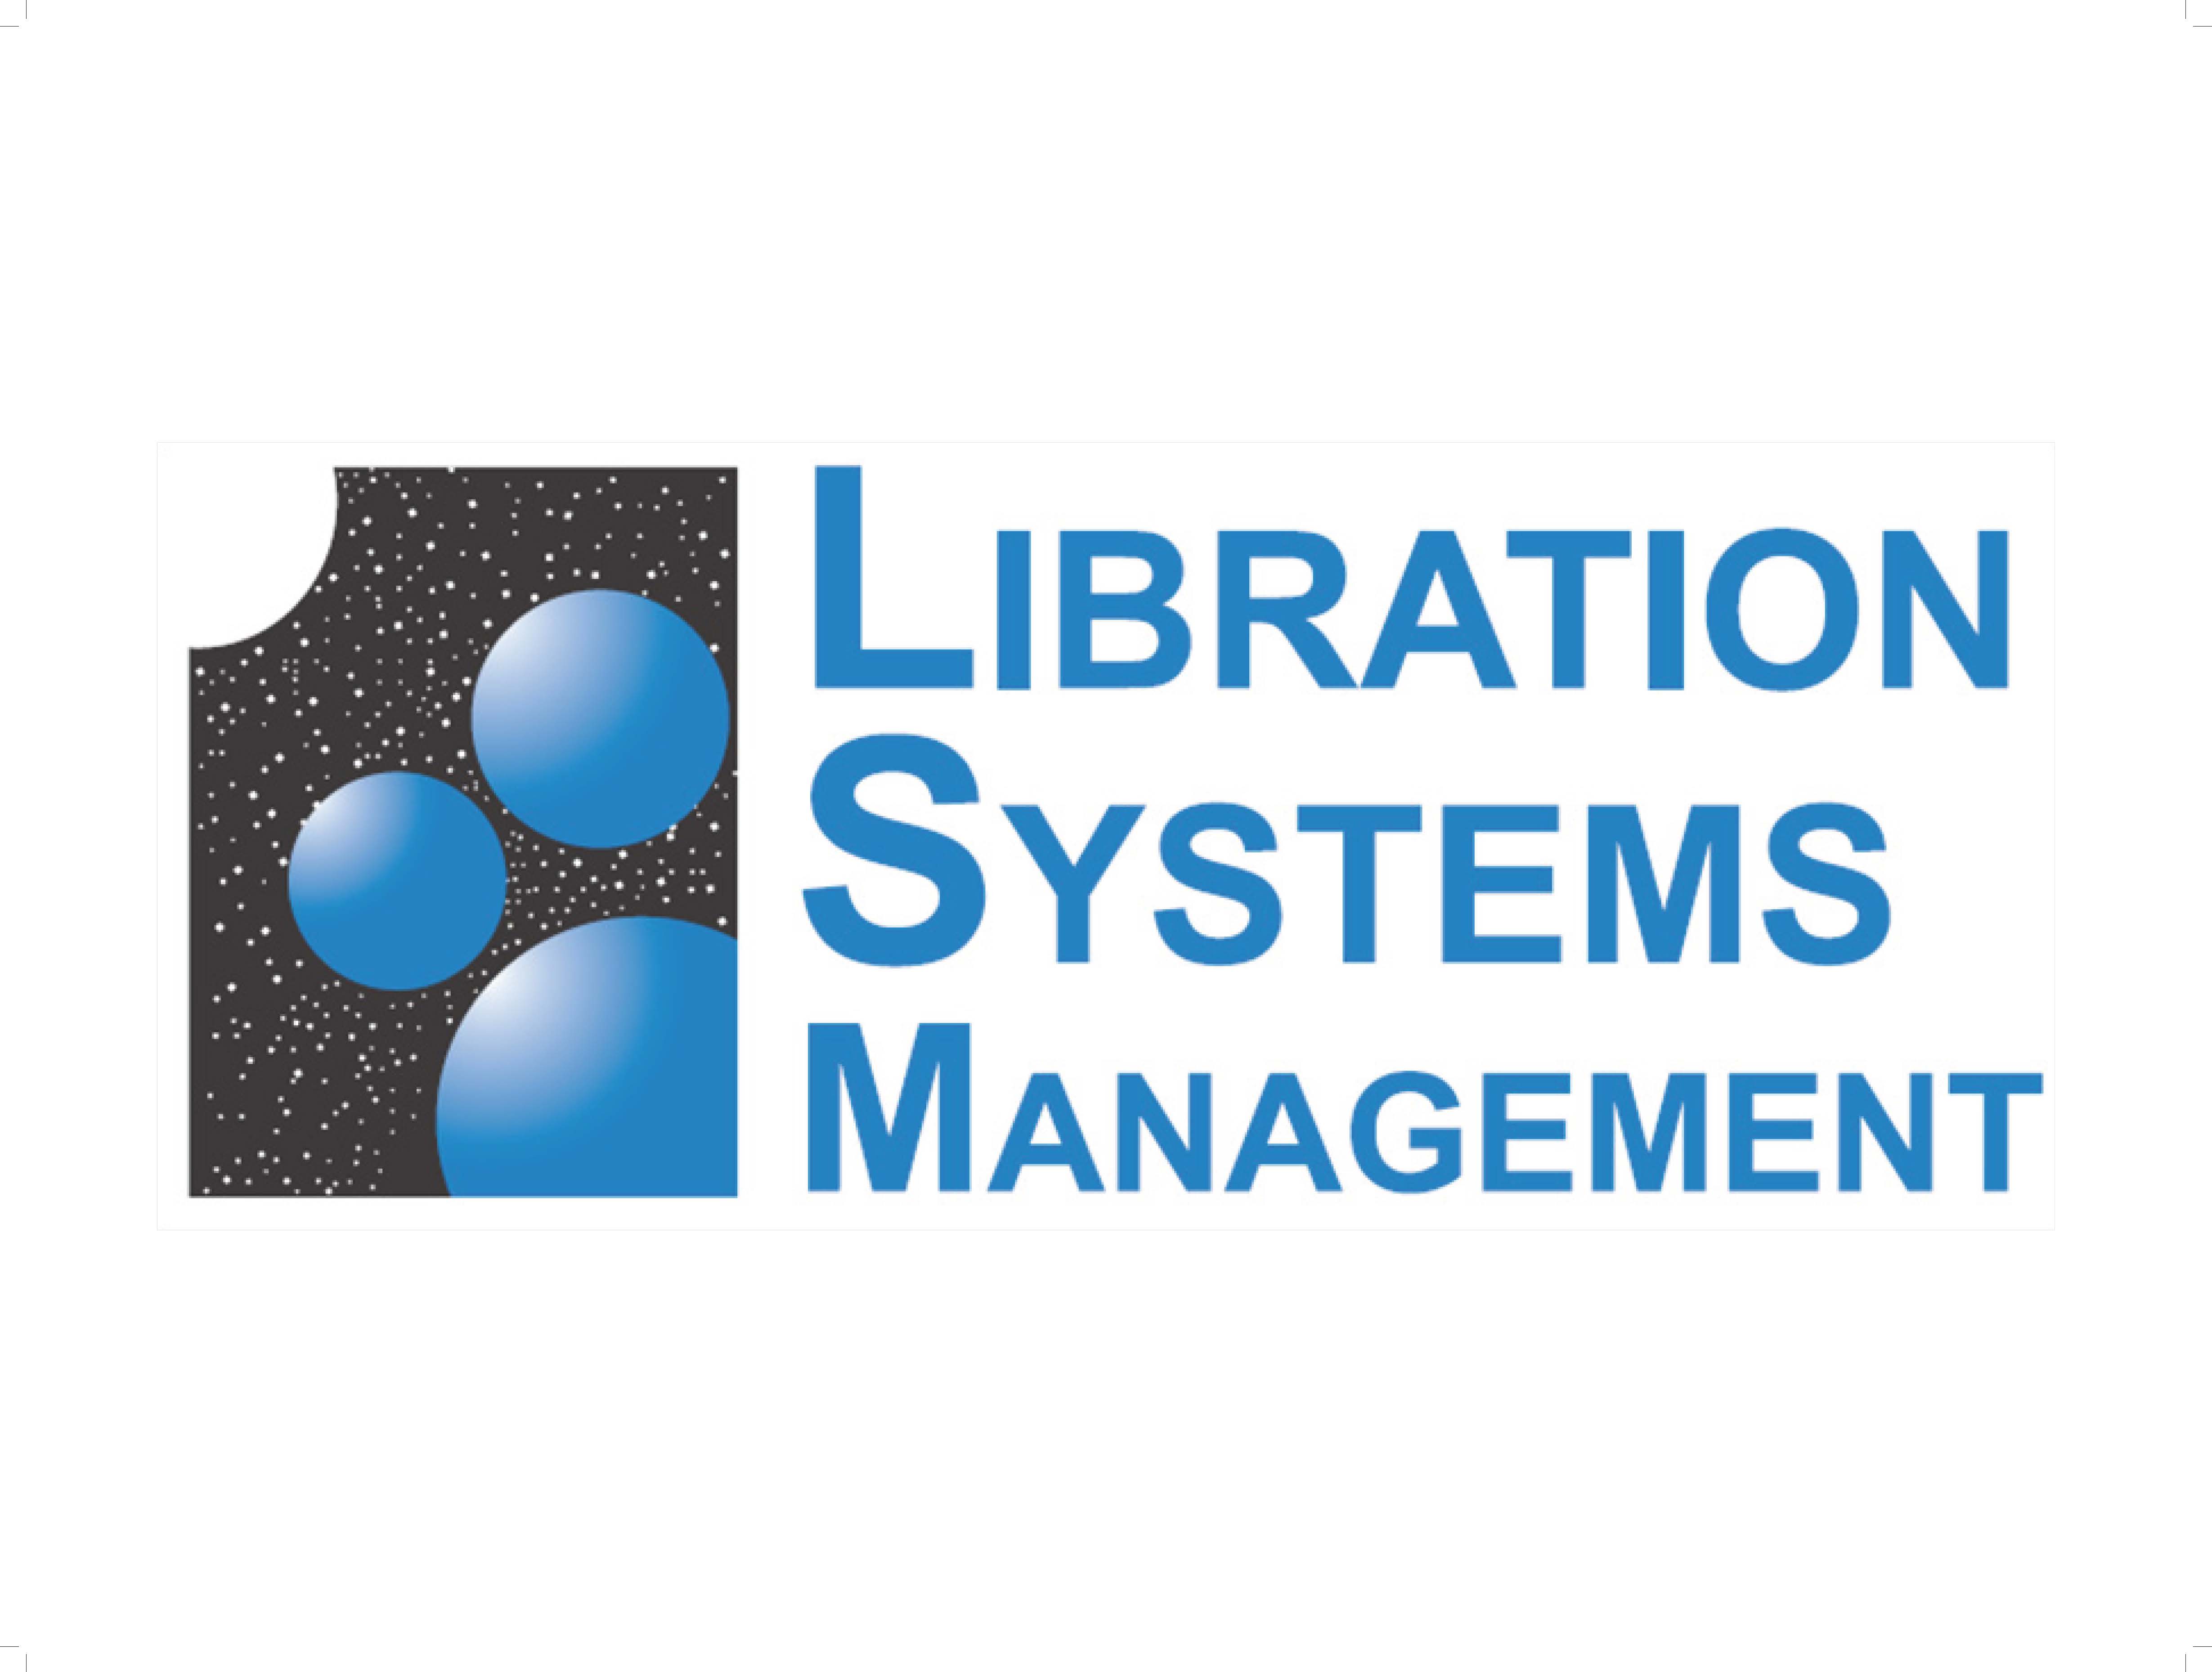 Libration Systems Management